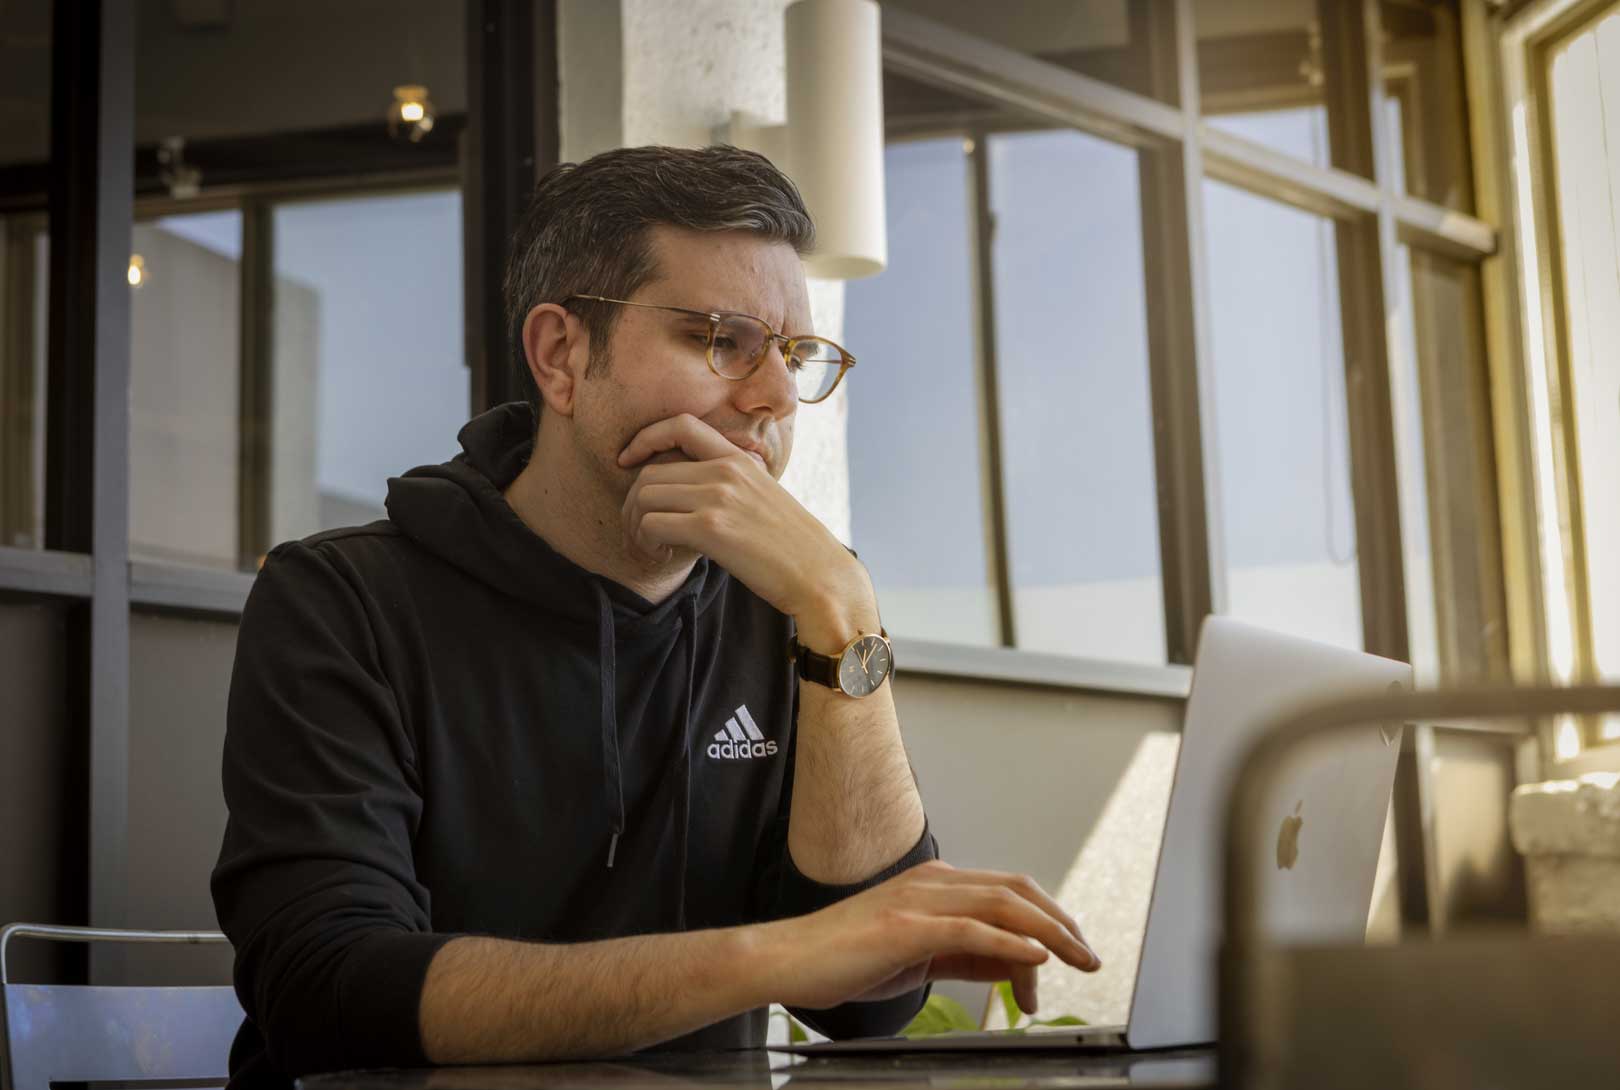 Travis Terrell wearing a black Adidas sweatshirt sitting working on his laptop